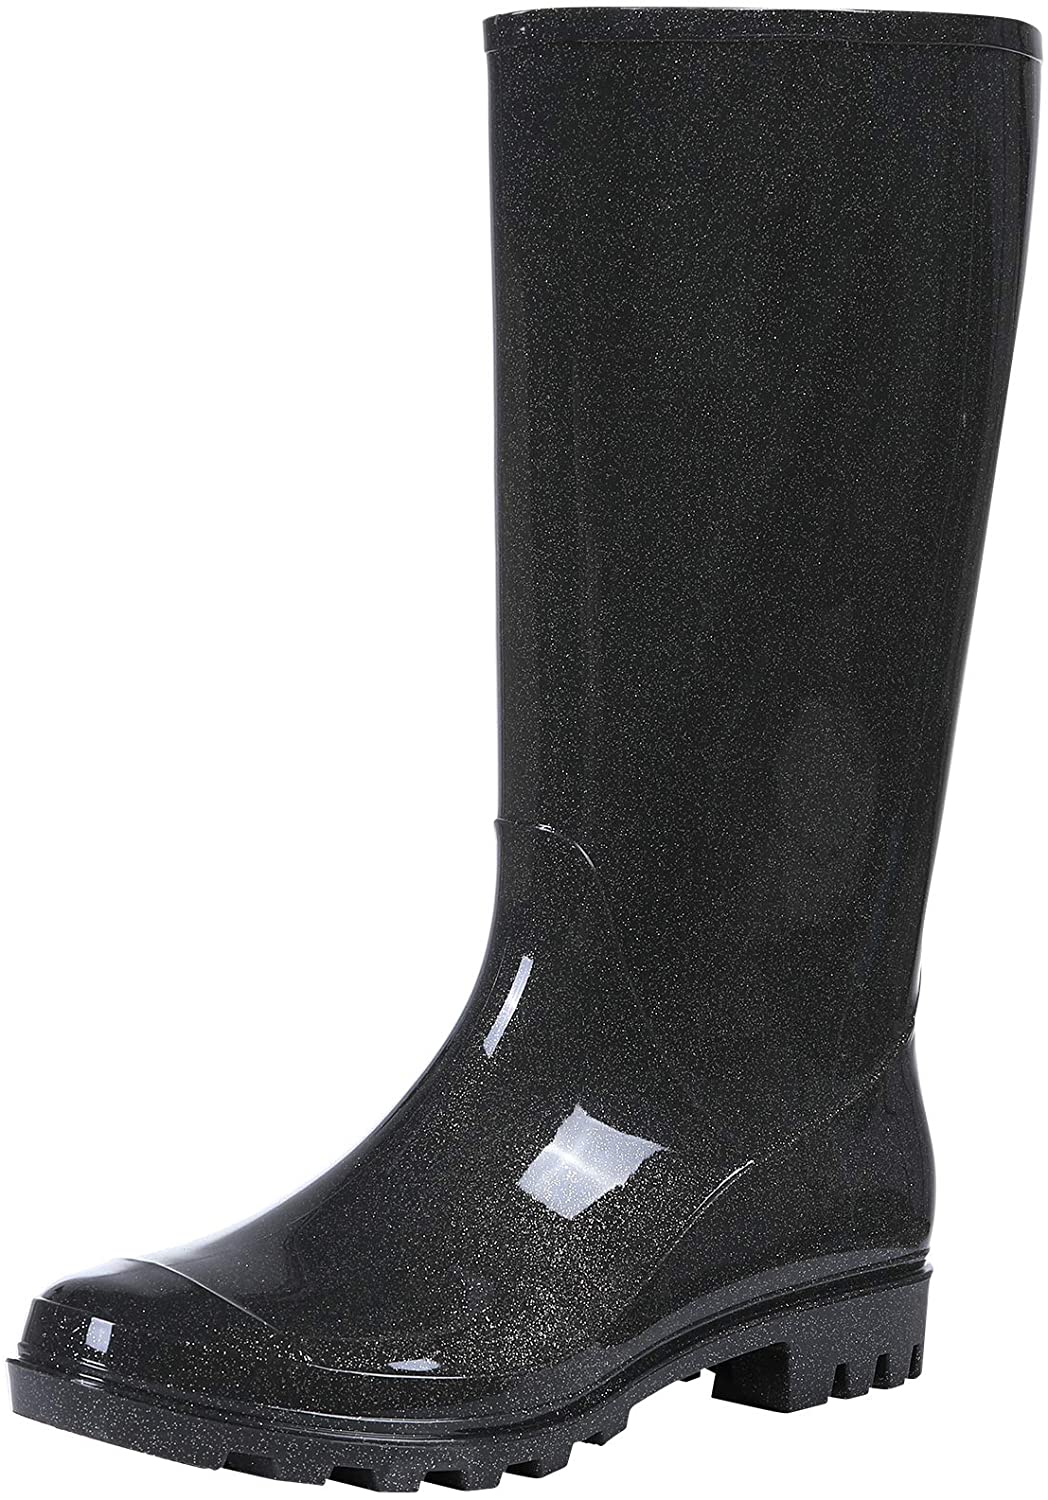 Women's Knee High Rain Boots Fashion Waterproof Tall Wellies Rain Shoes Narrow Calf 